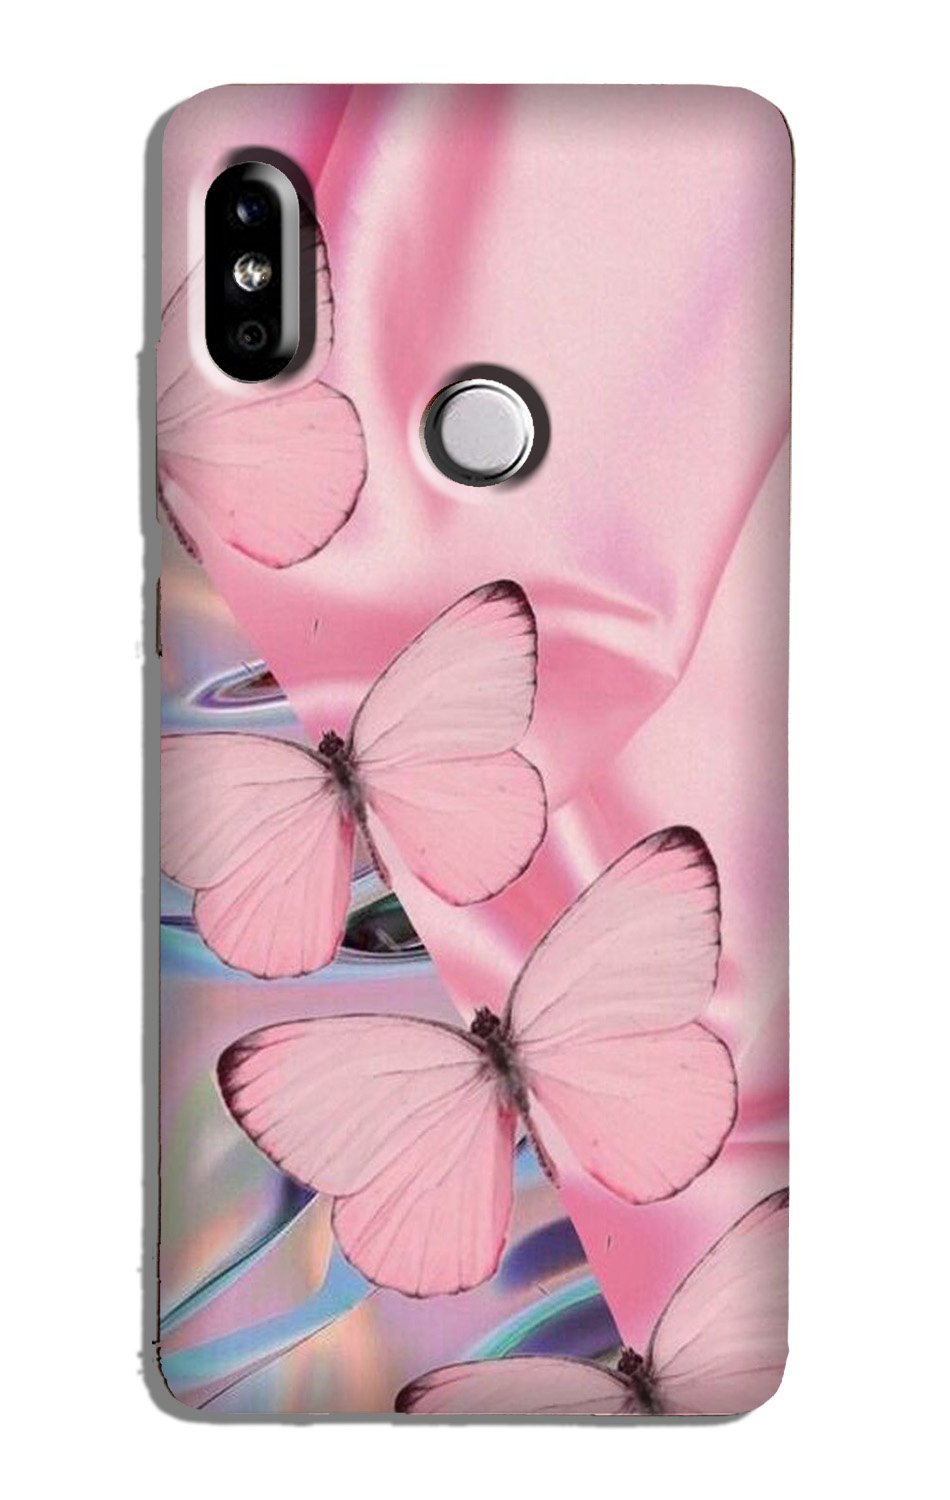 Butterflies Case for Xiaomi Redmi 7